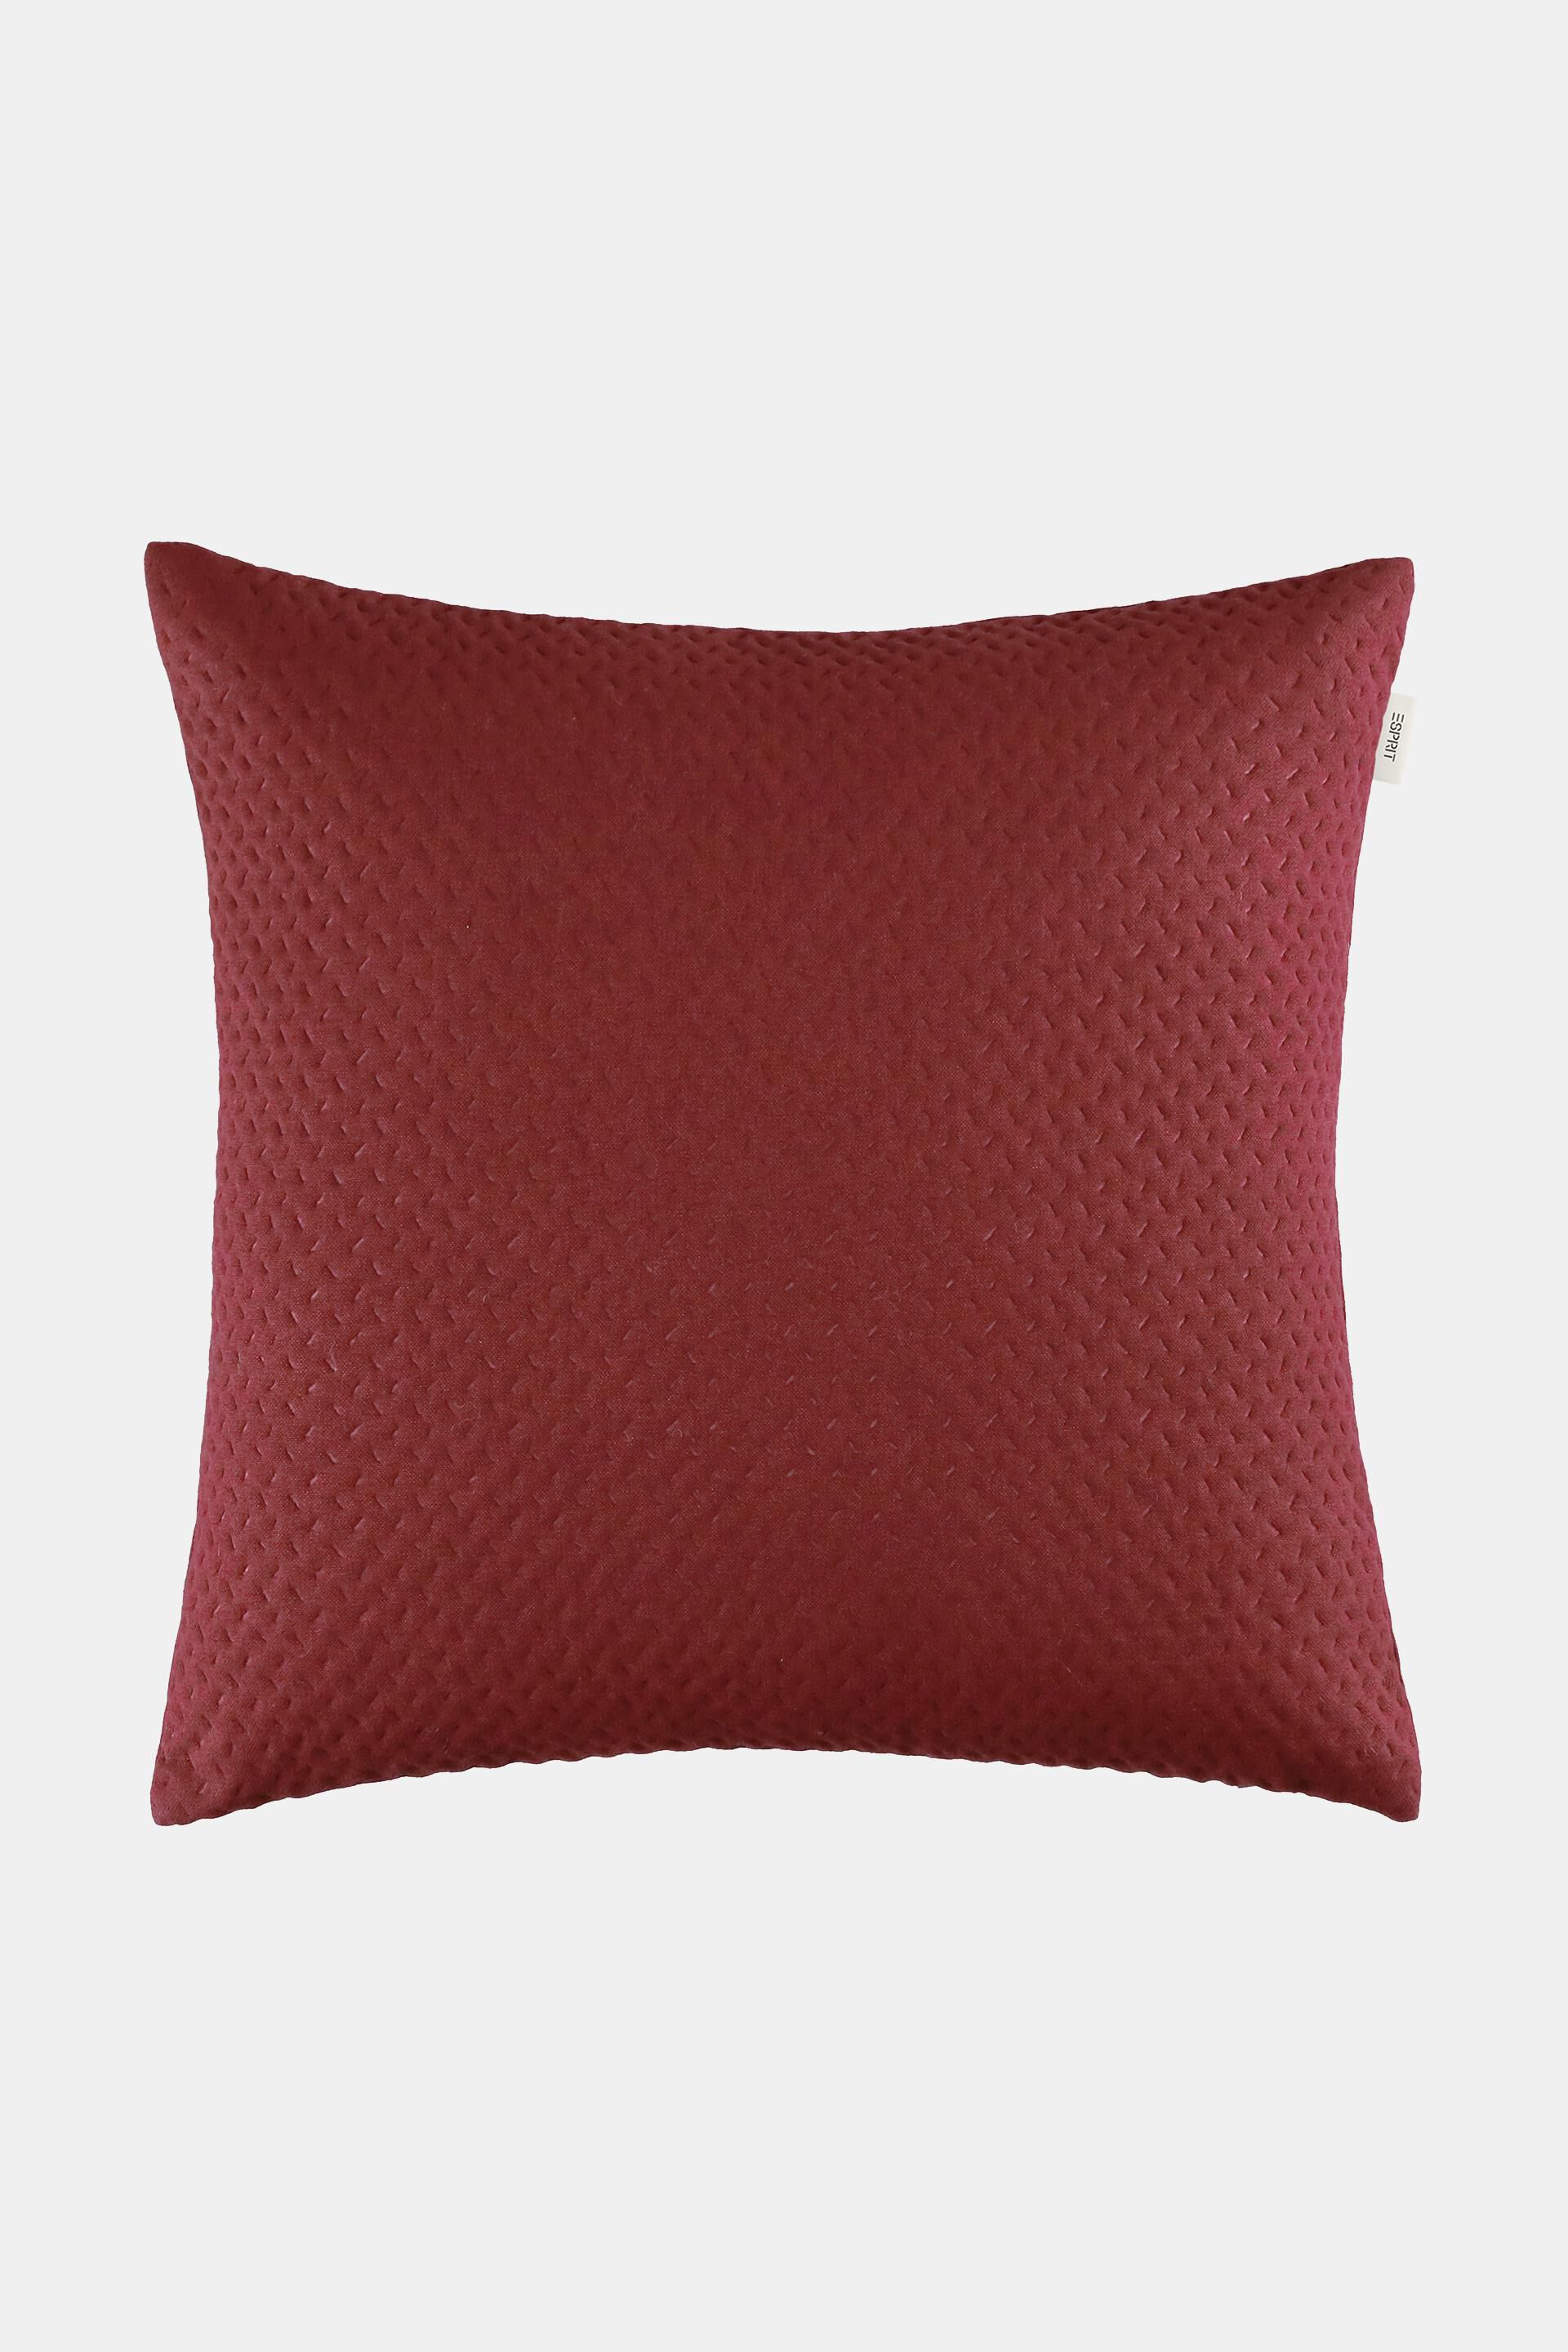 Esprit cover Woven cushion decorative